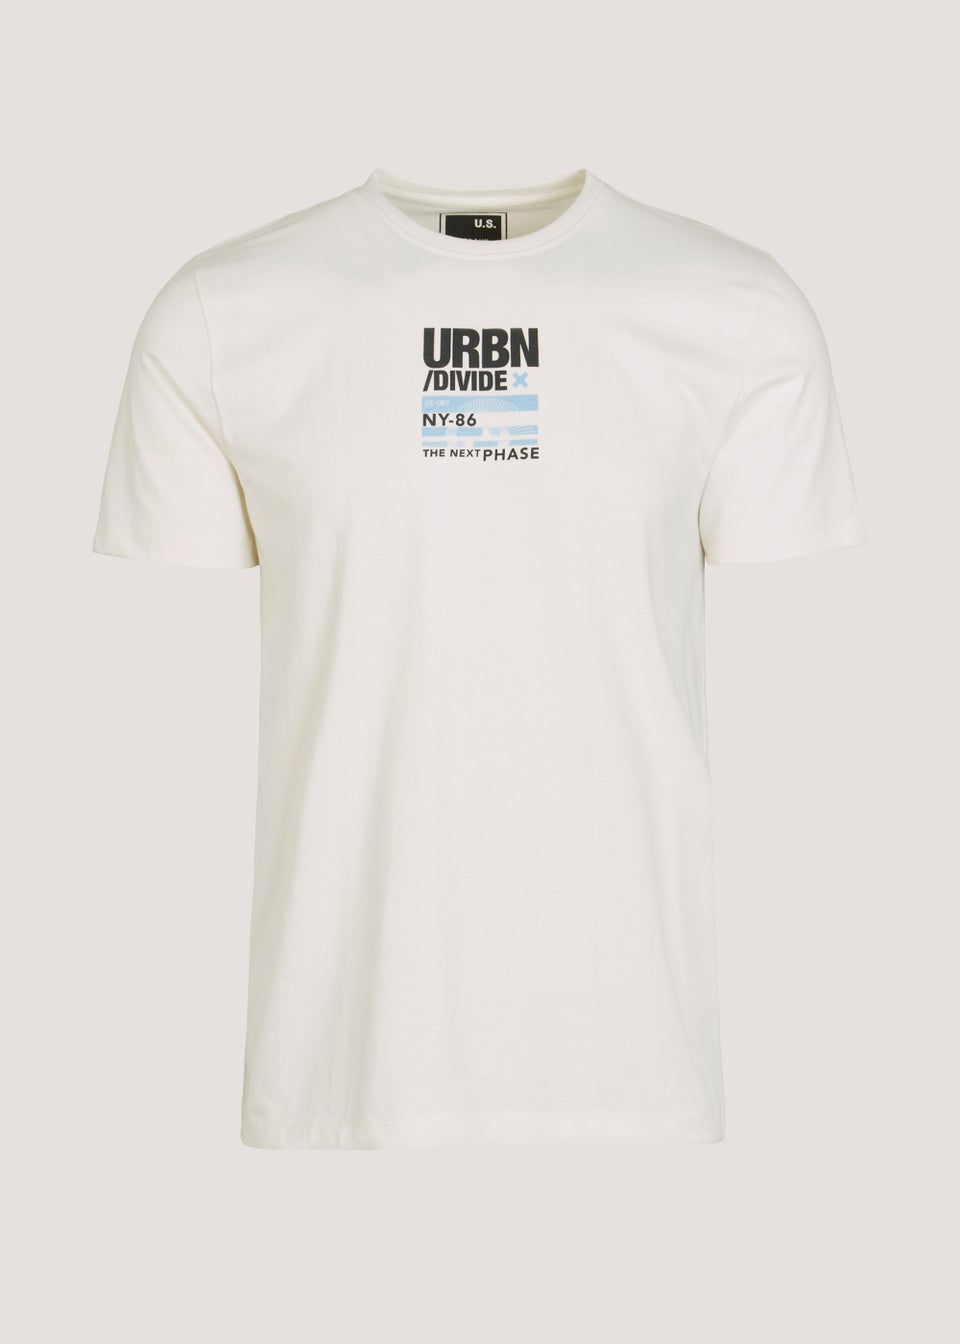 US Athletic Cream Urban Print T-Shirt